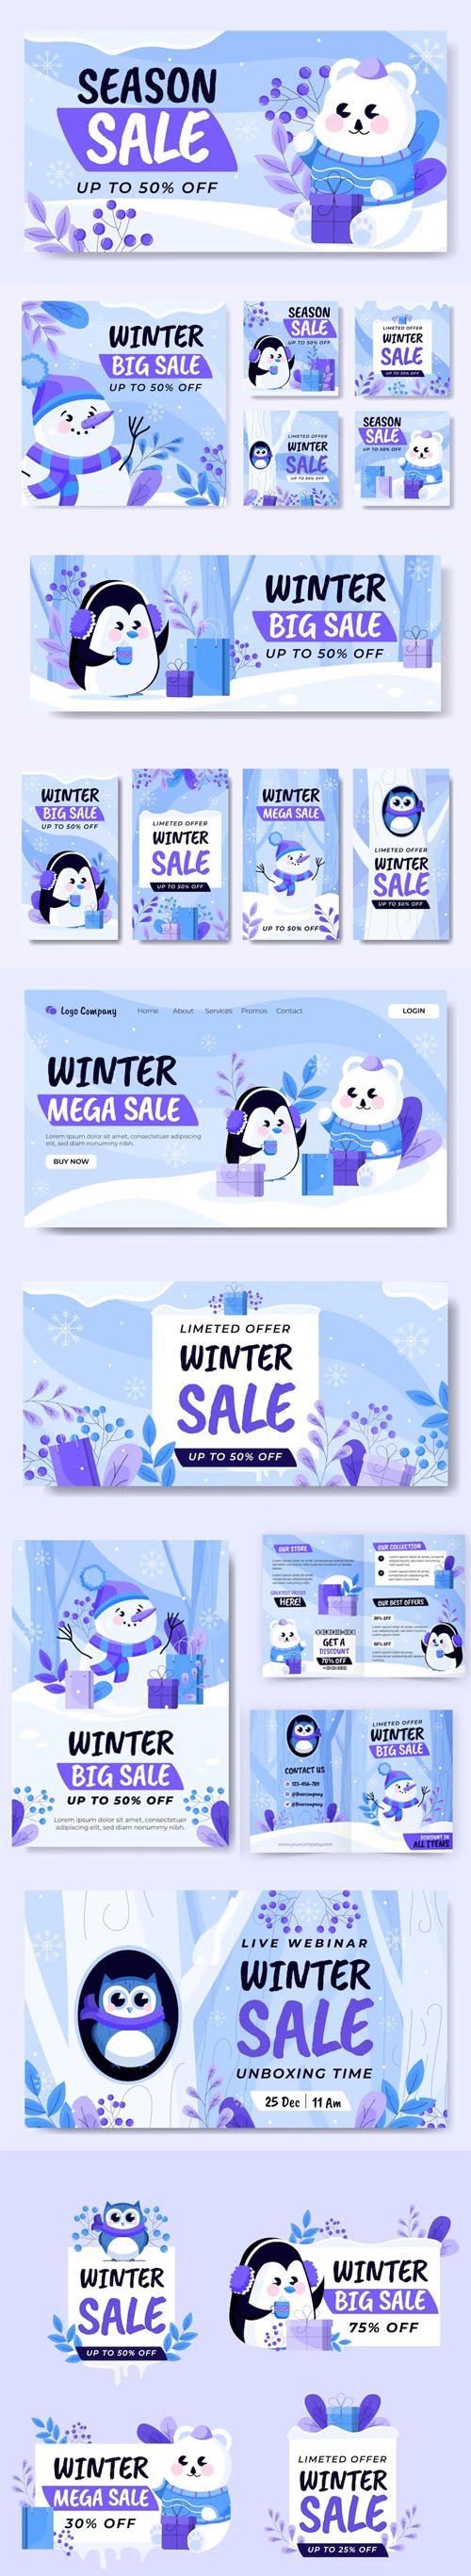 Winter Season Sale Hand drawn Flat Marketing Pack - 10 Vector Design Templates